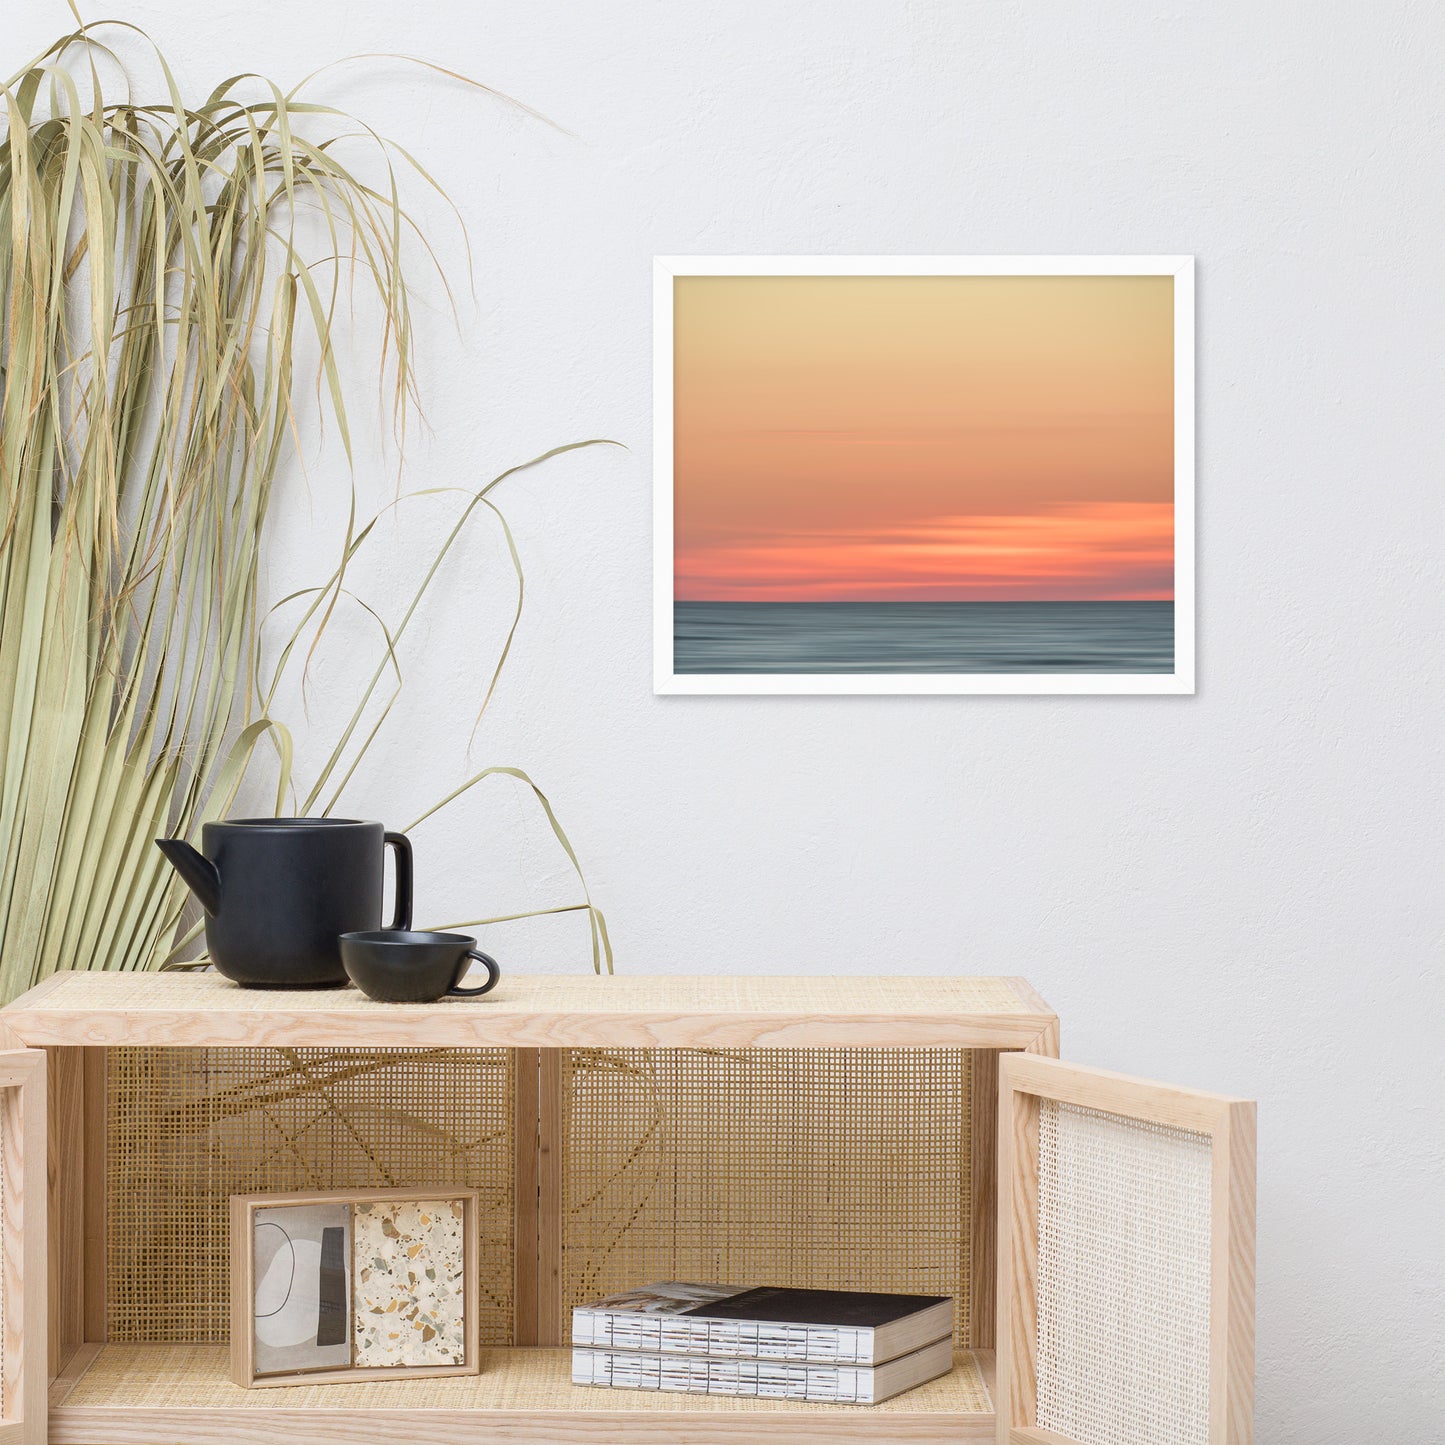 wall art for living room, Pink Coastal Wall Art: Abstract Color Blend Ocean Sunset - Coastal / Beach / Seascape / Nature / Landscape Photo Framed Wall Art Print - Artwork - Wall Decor